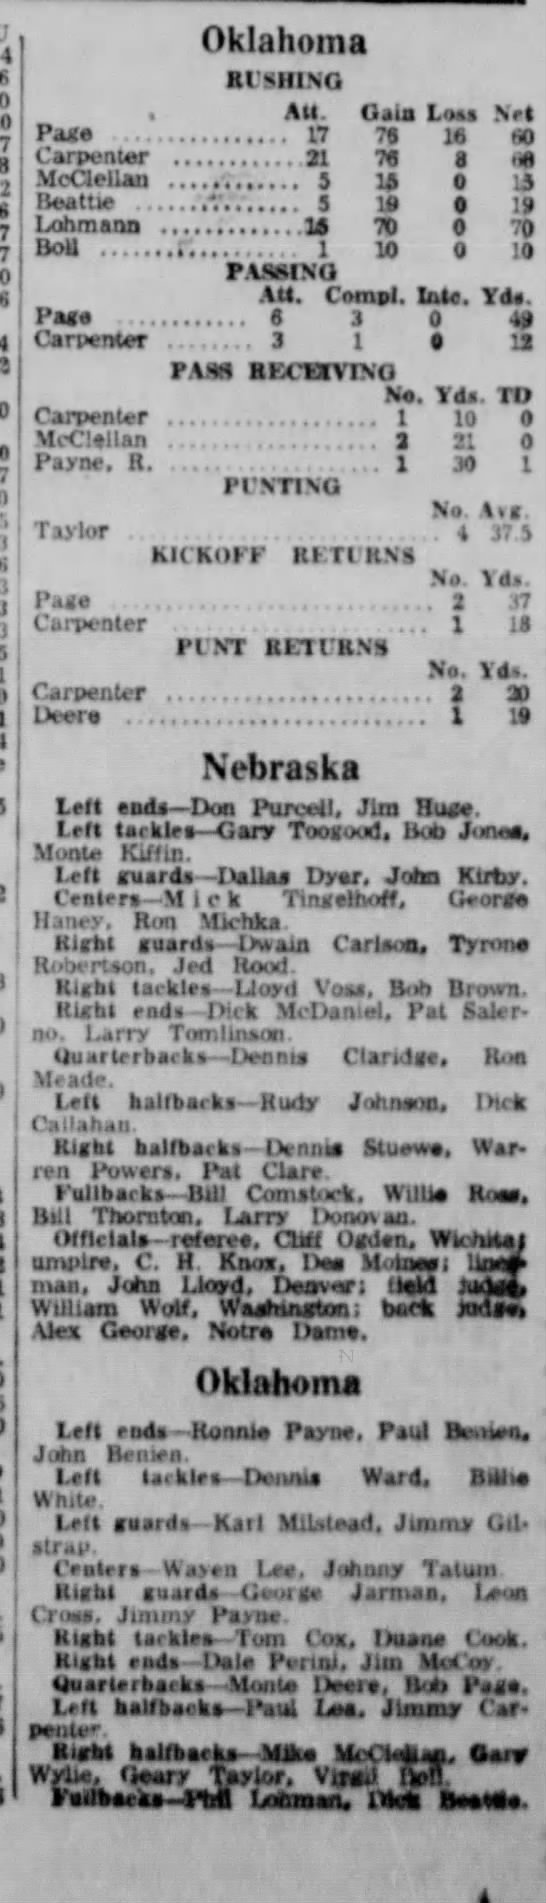 1961 Nebraska-Oklahoma stats part 2 - 